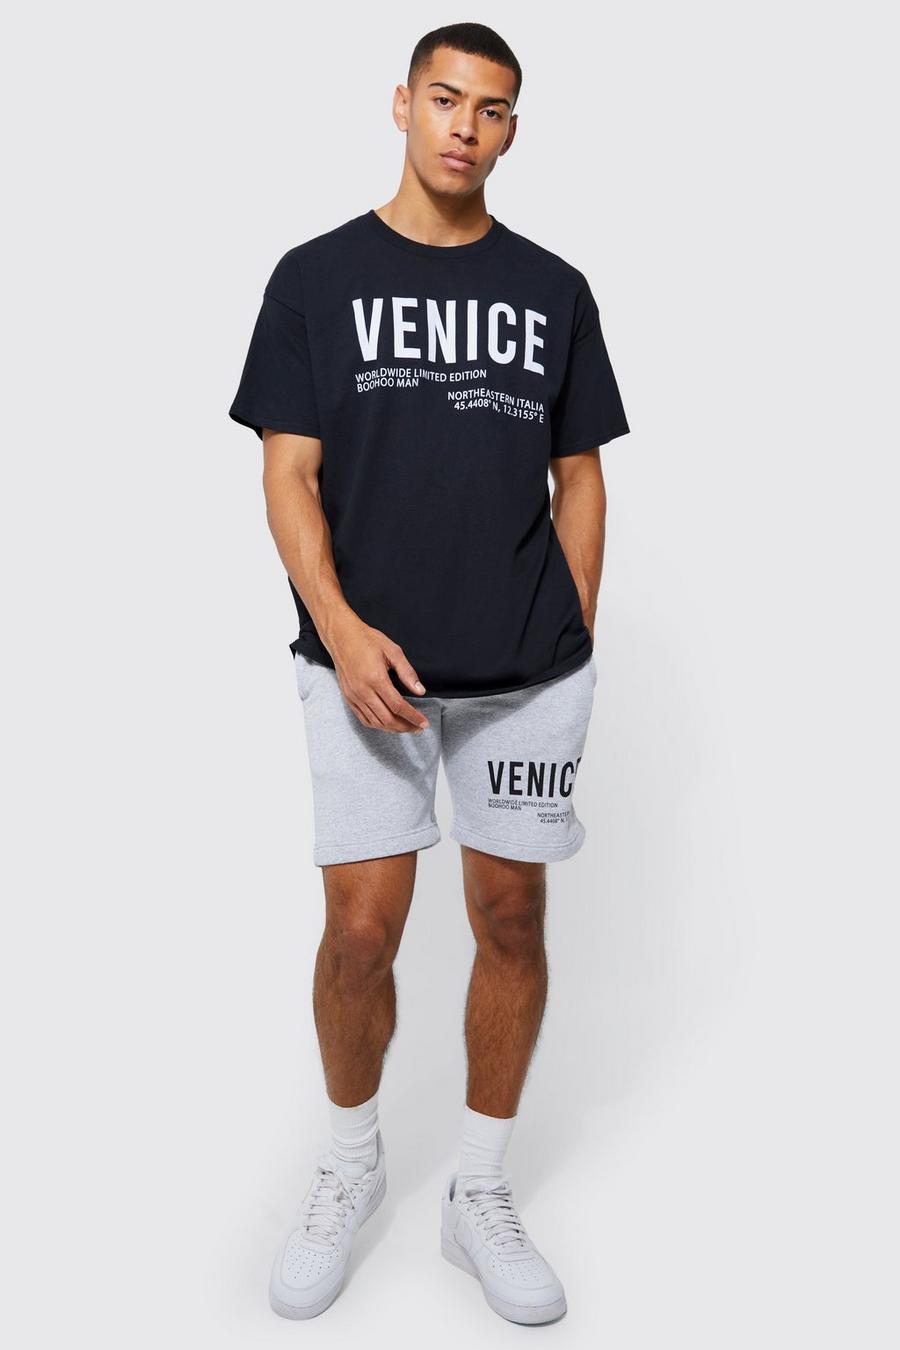 Black Oversized Venice City Print T-shirt Set